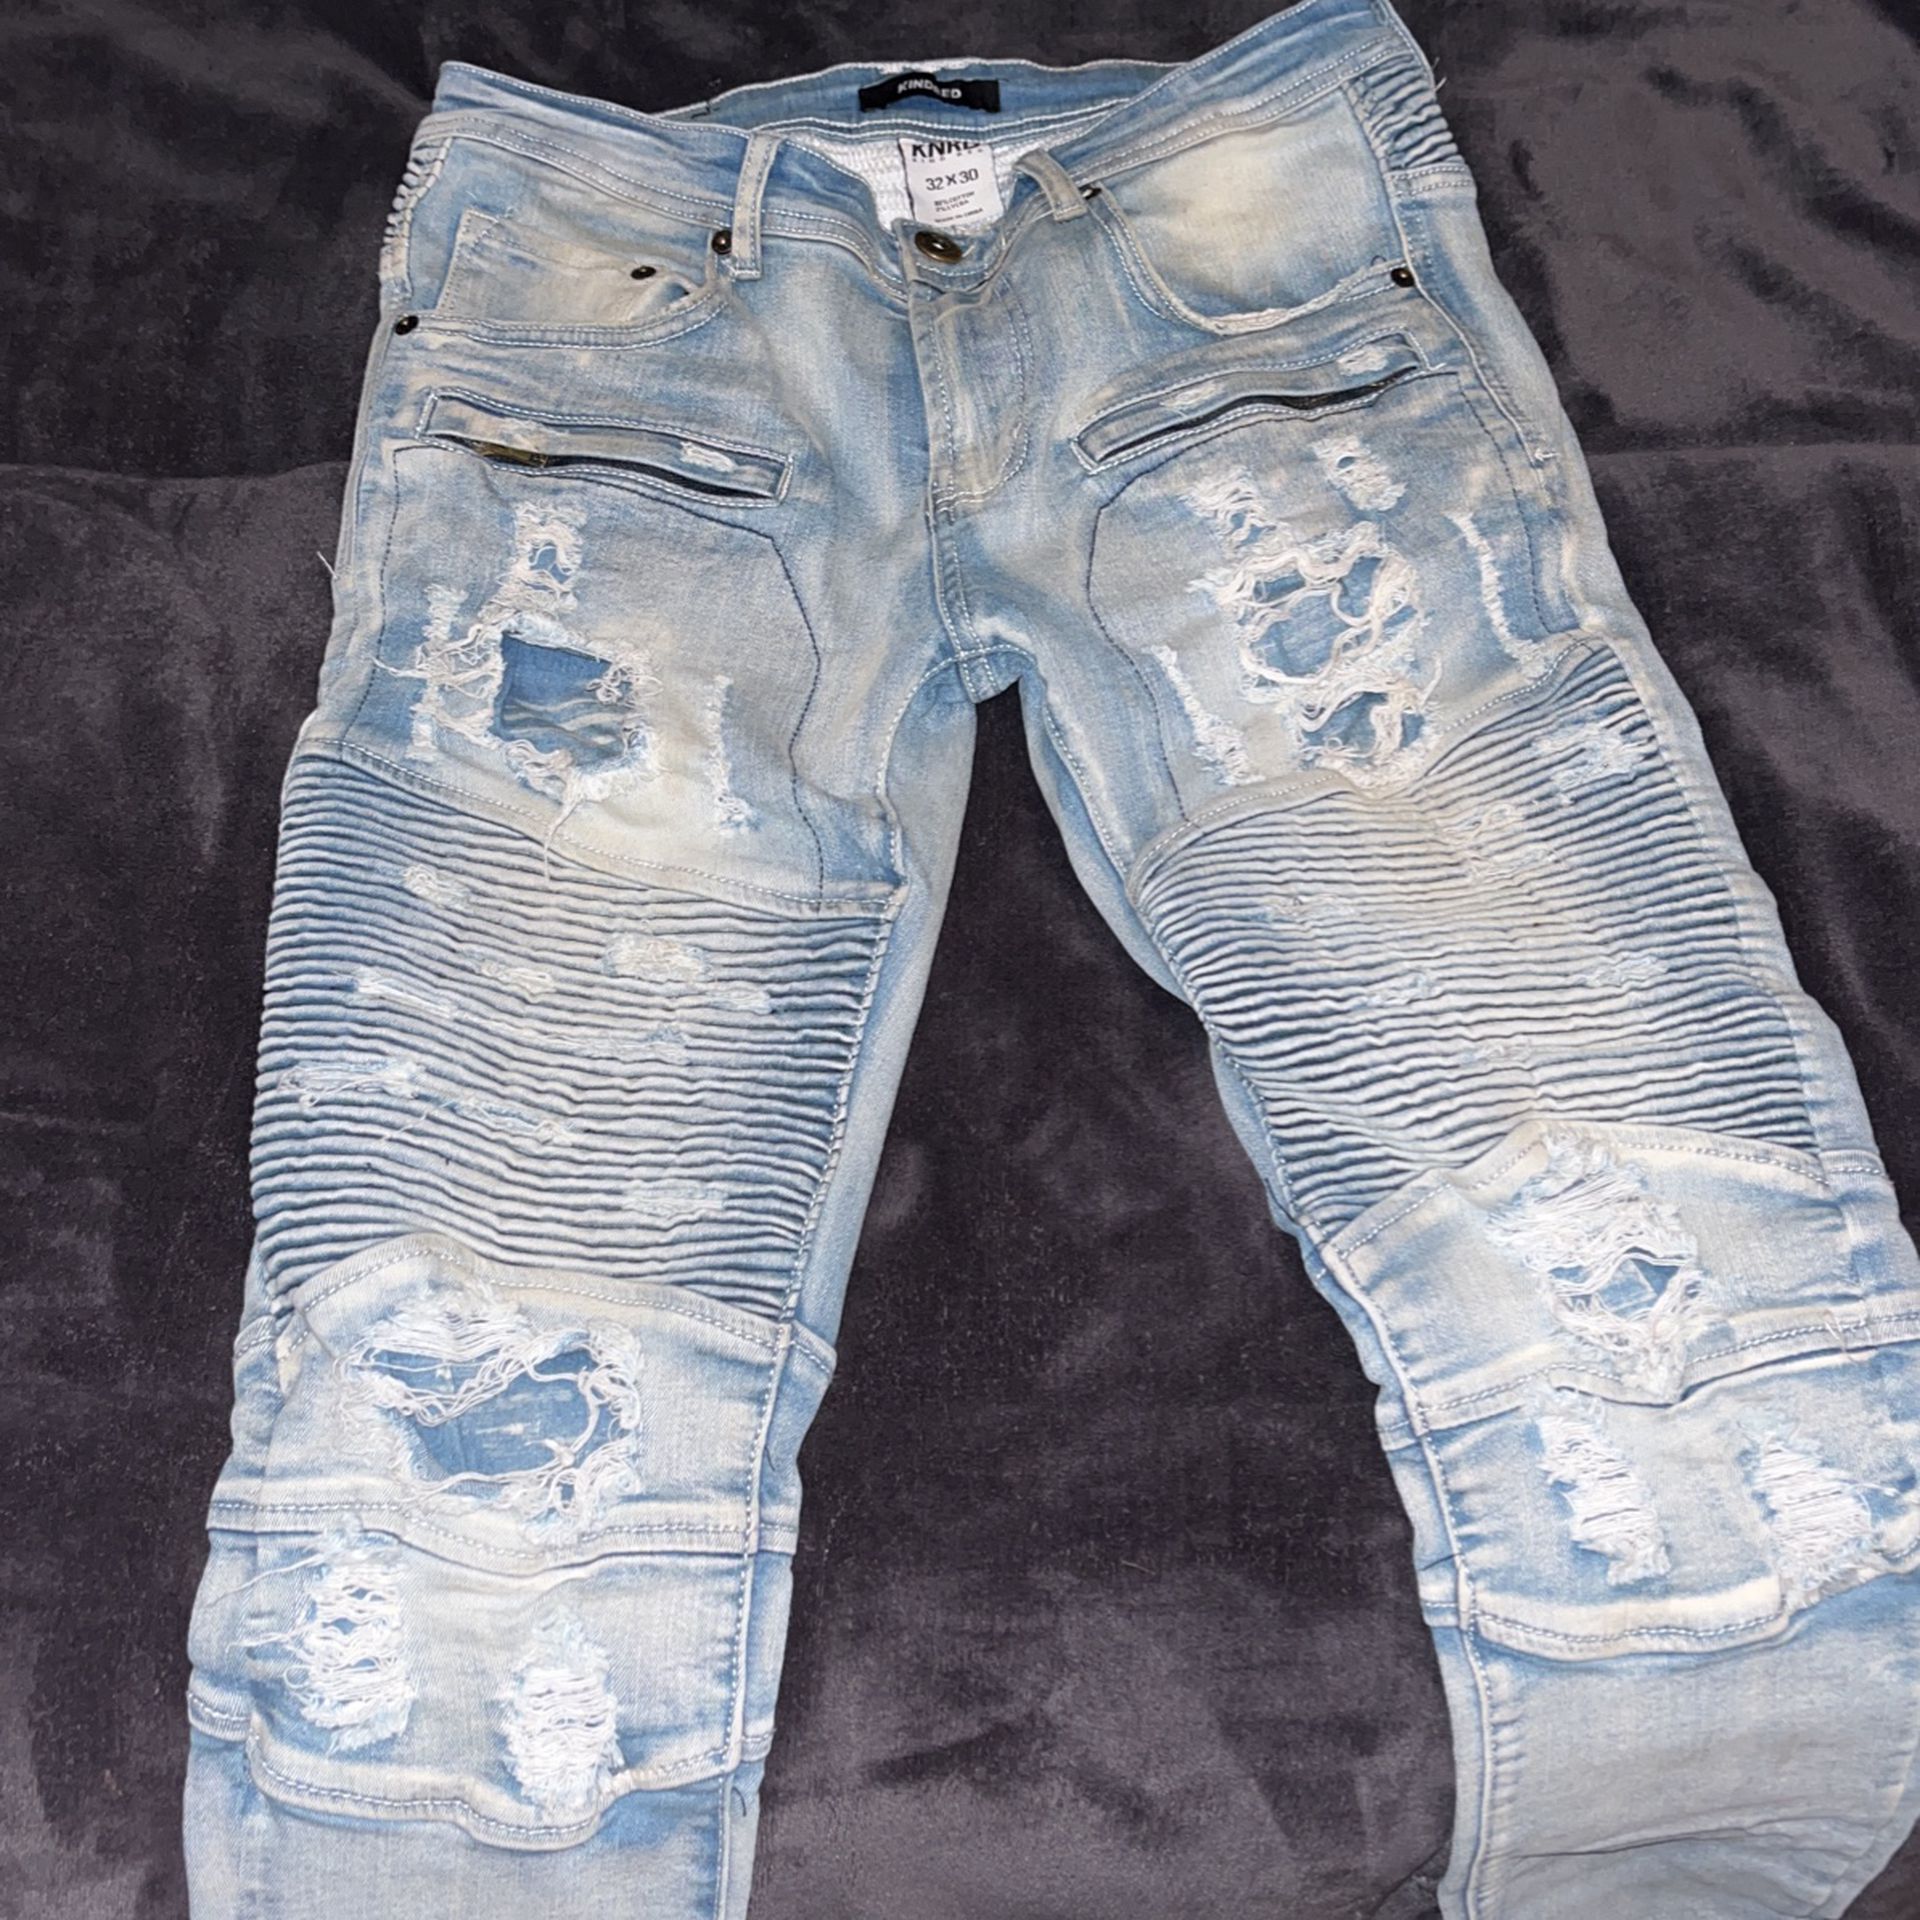 KNRD Jeans Size 32x30